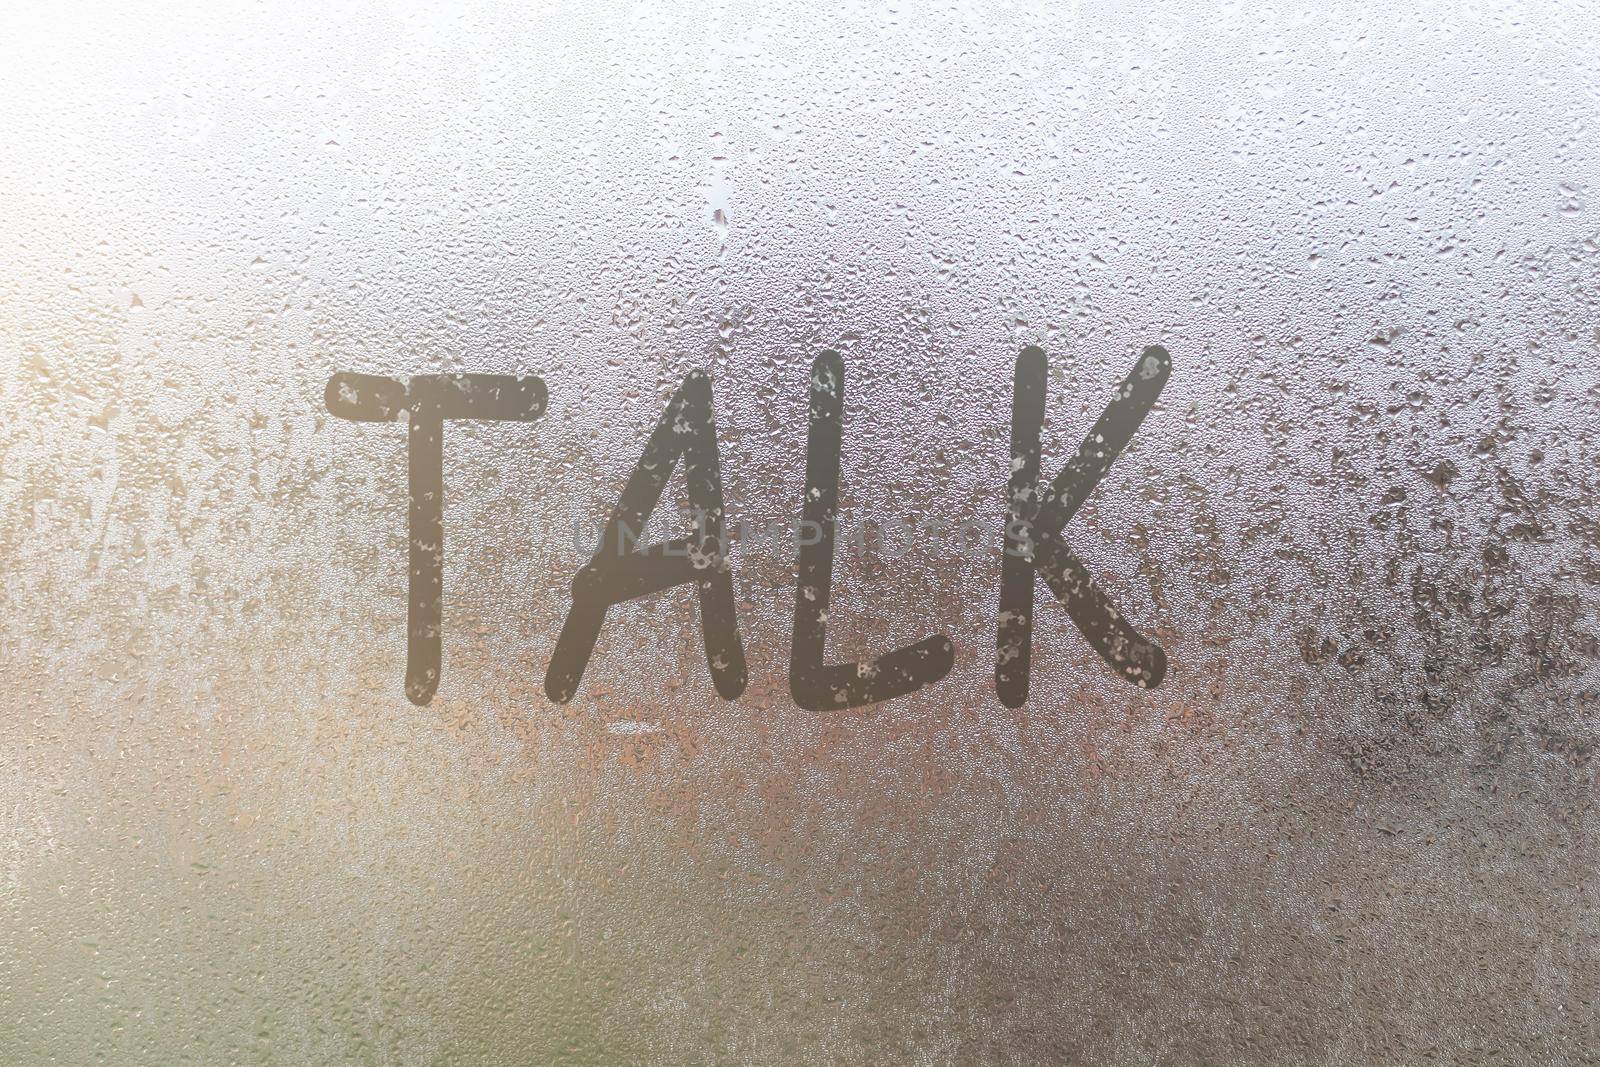 The word talk written on the sweaty glass of the window.